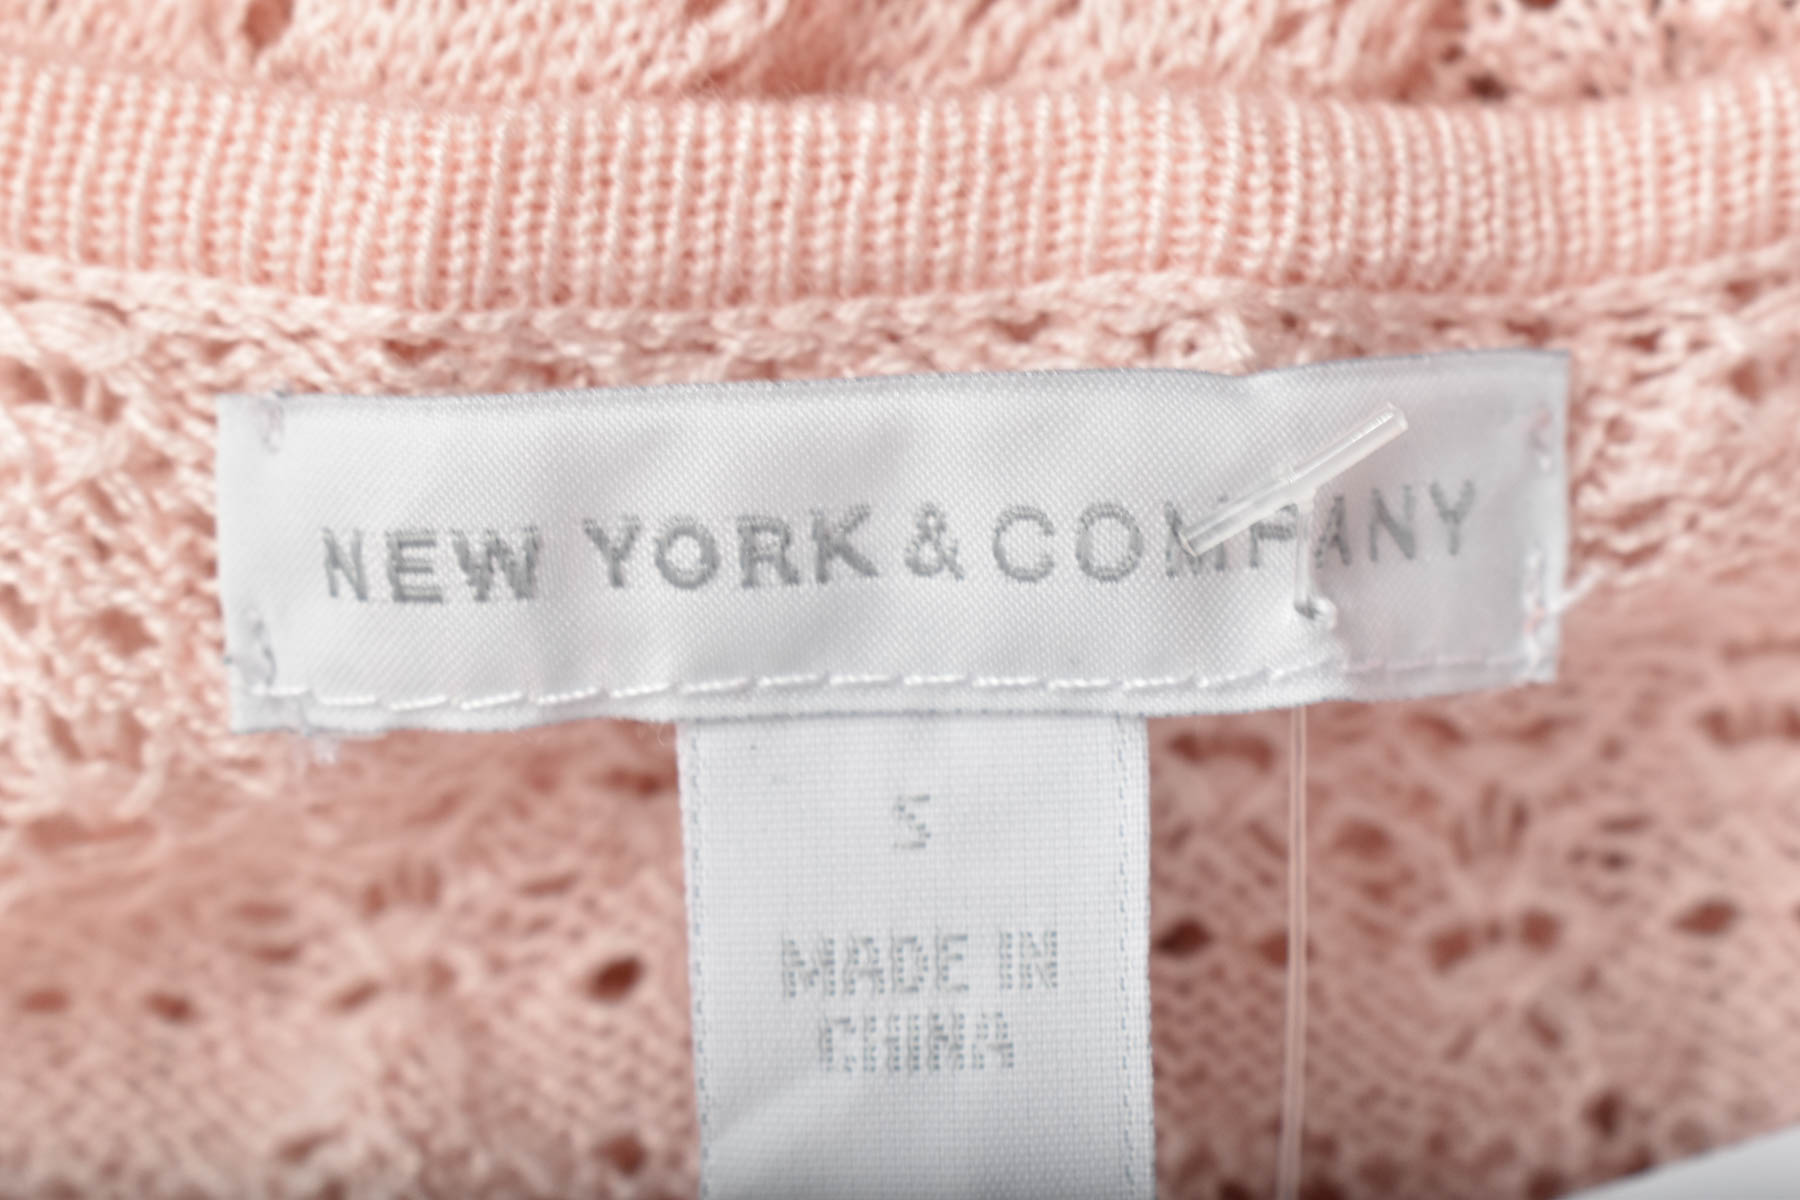 Women's sweater - New York & Company - 2